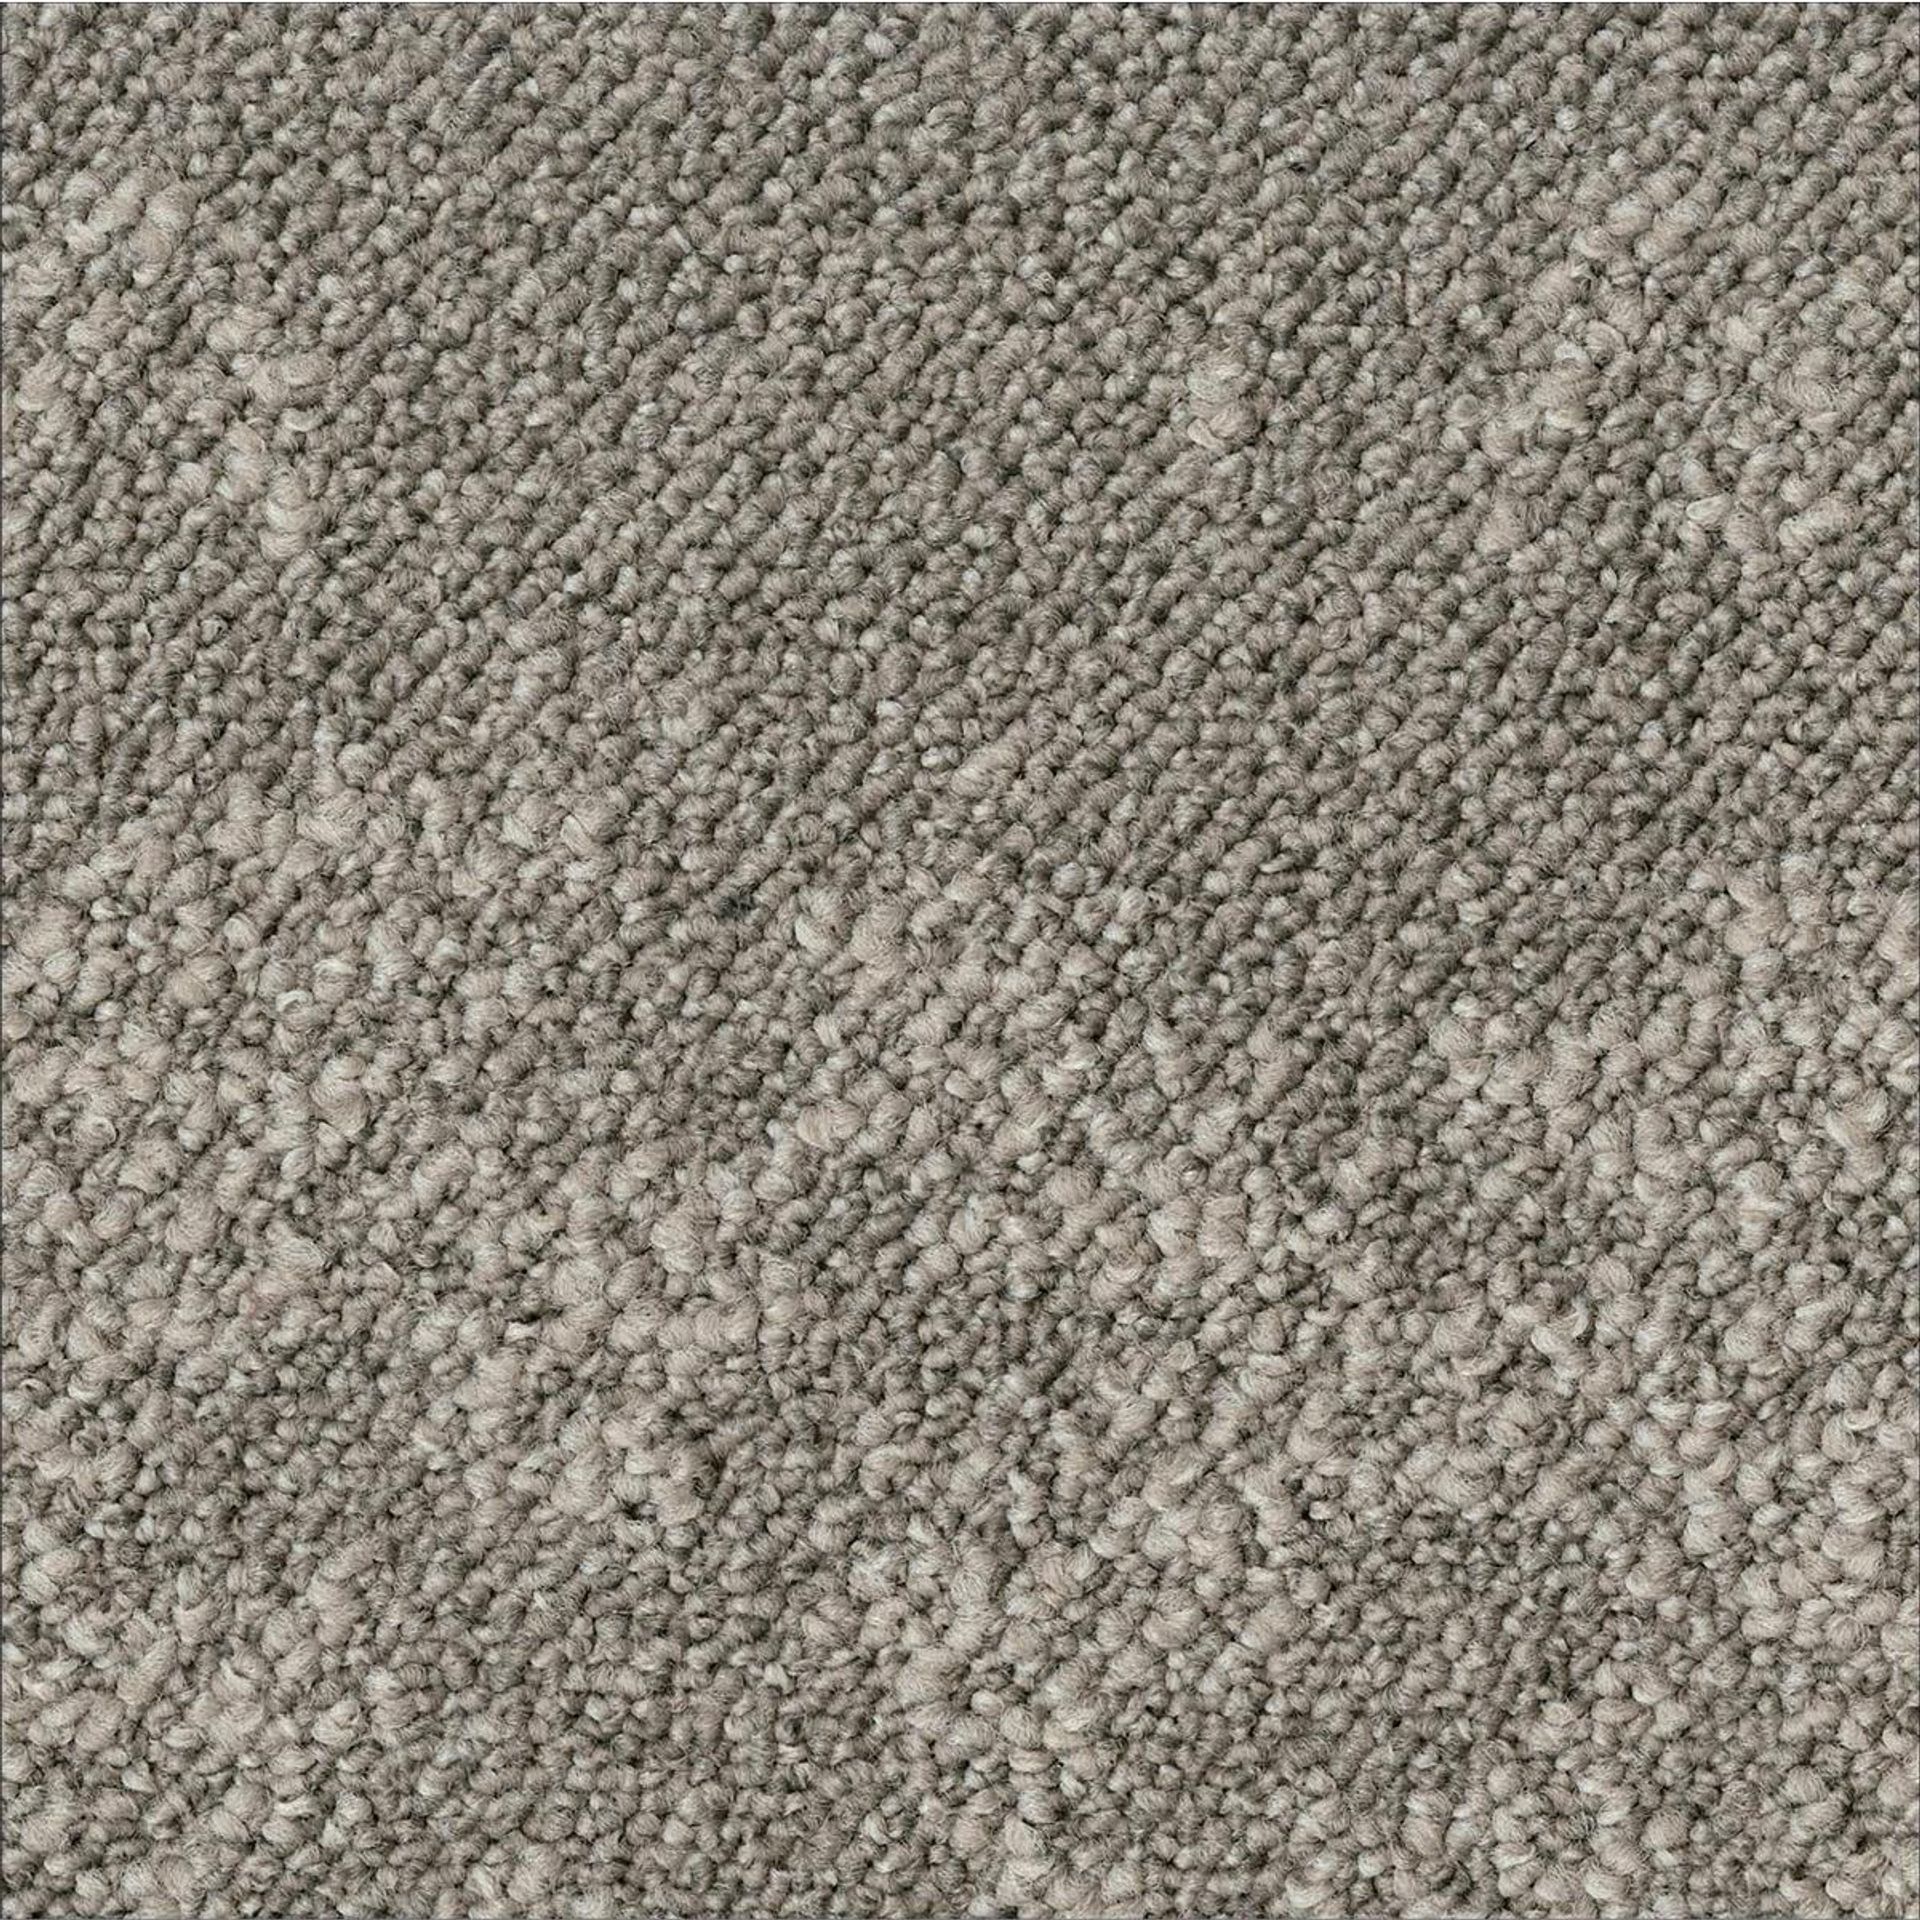 Teppichfliesen 50 x 50 cm Schlinge strukturiert Arable AA86 9106 Grau Organisch